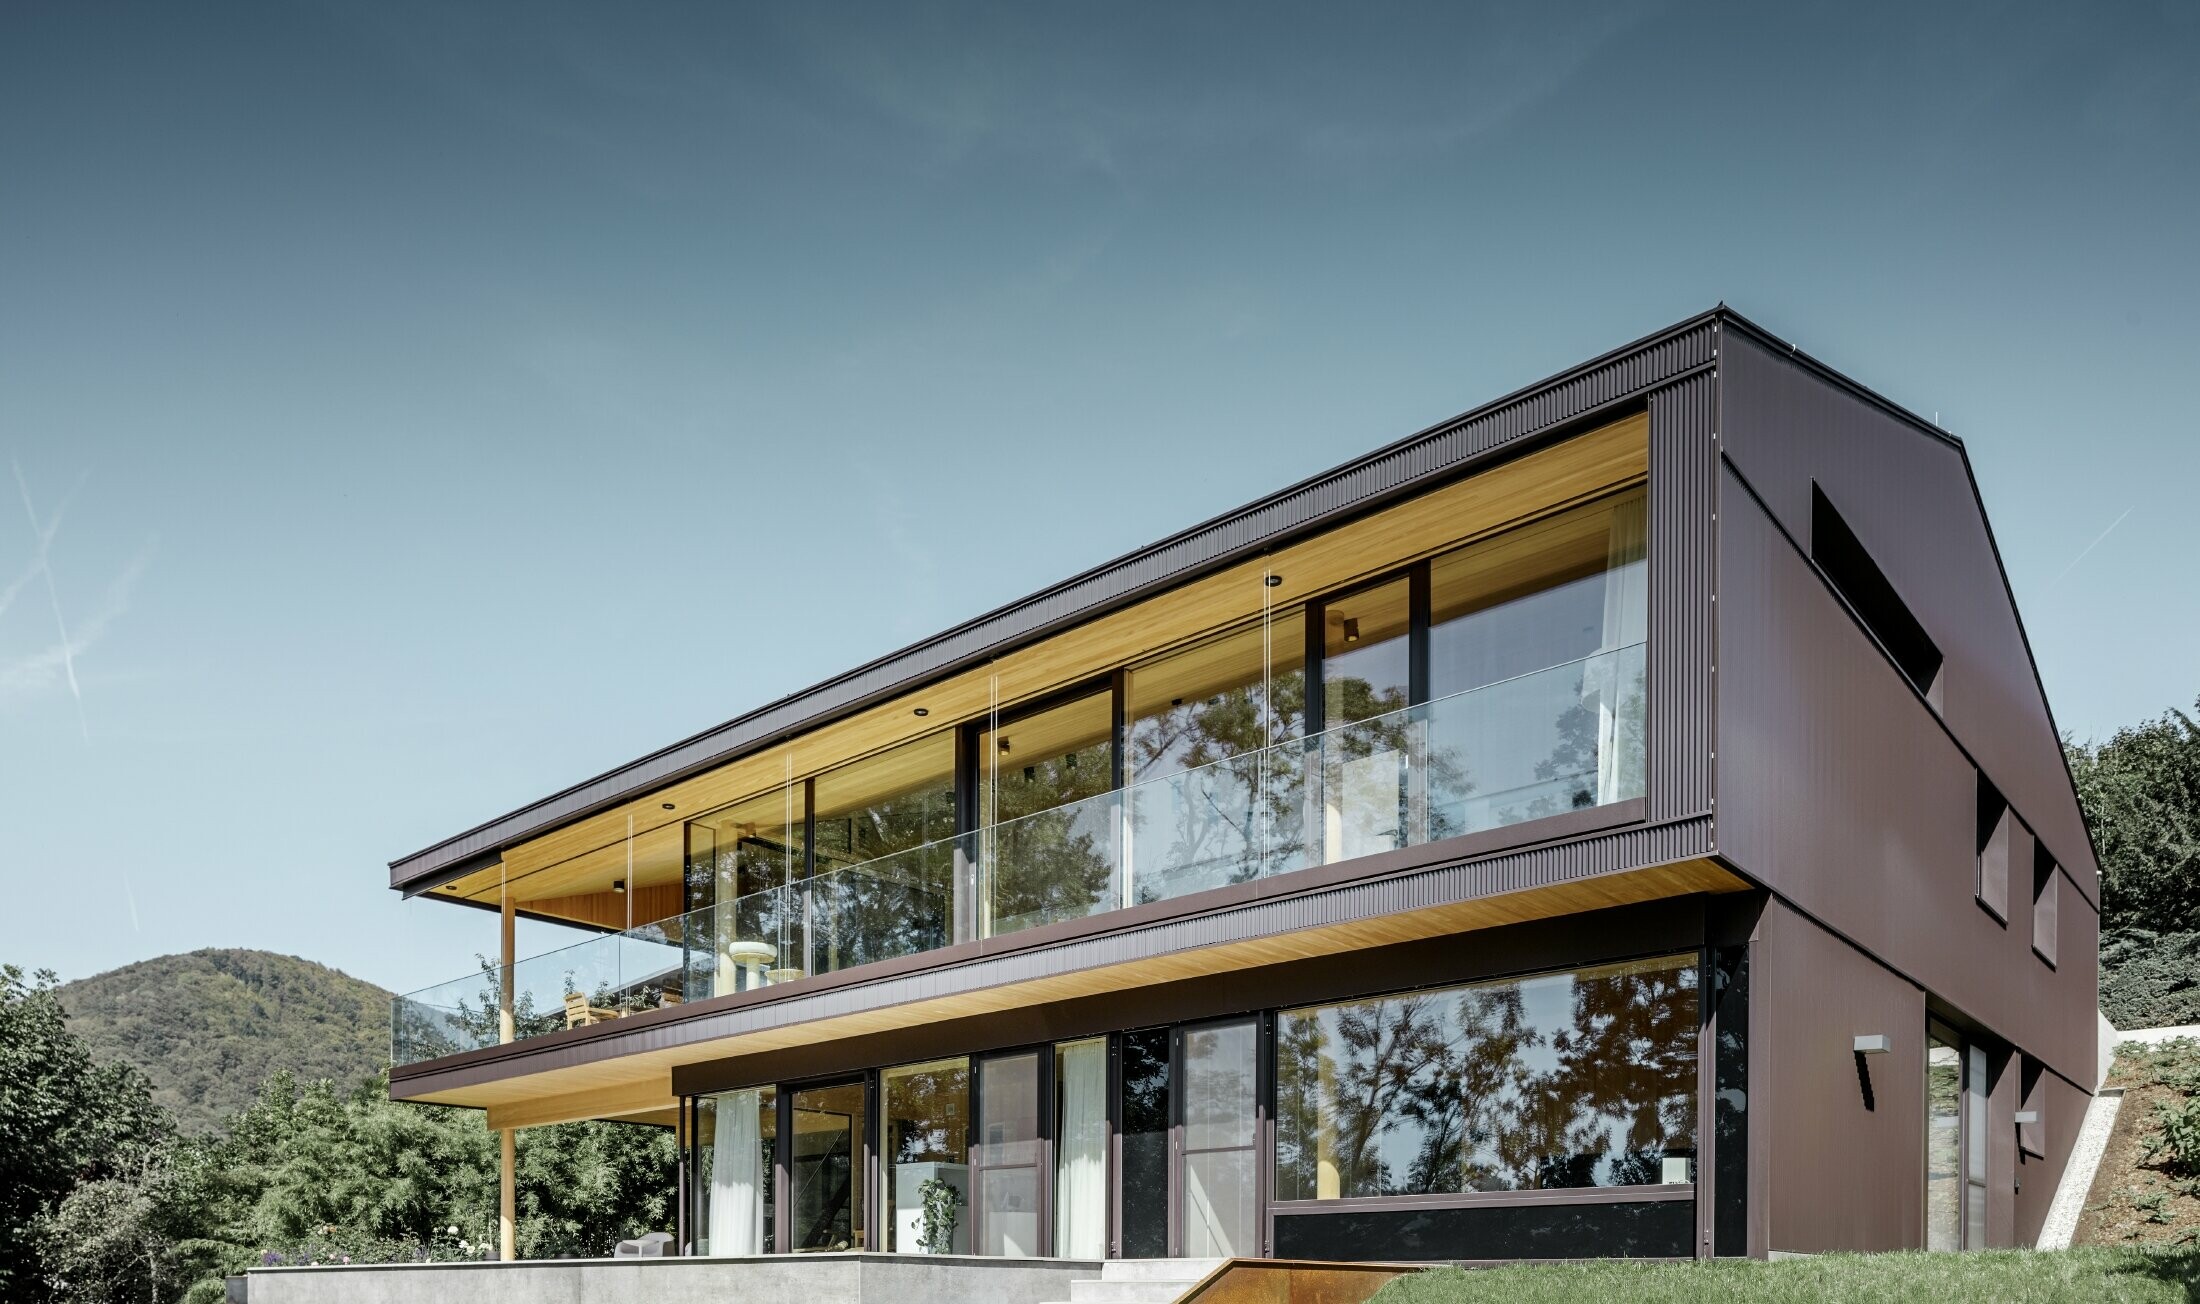 Moderne enebolig med store vinduer på hagesiden, fasaden er kledd med PREFA sikksakkprofil i mørkebrunt.